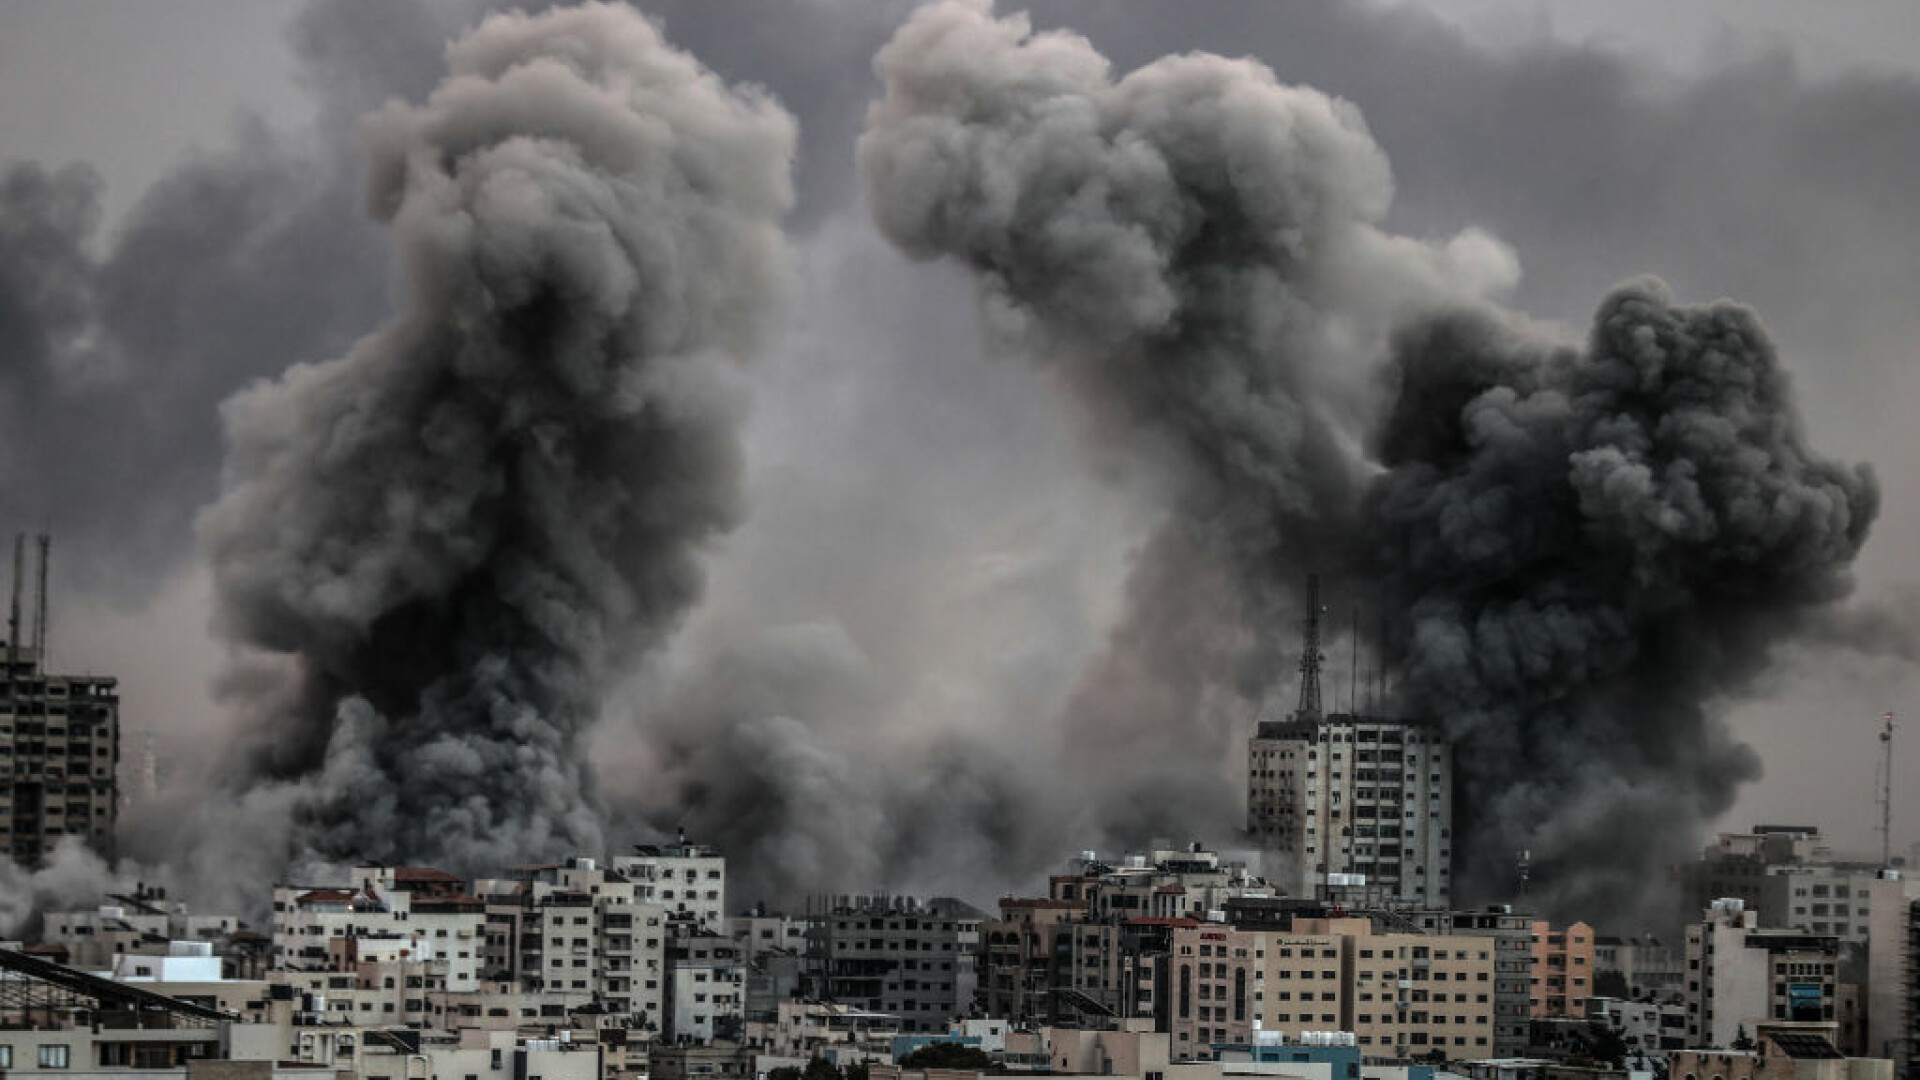 atac israel, fasia gaza